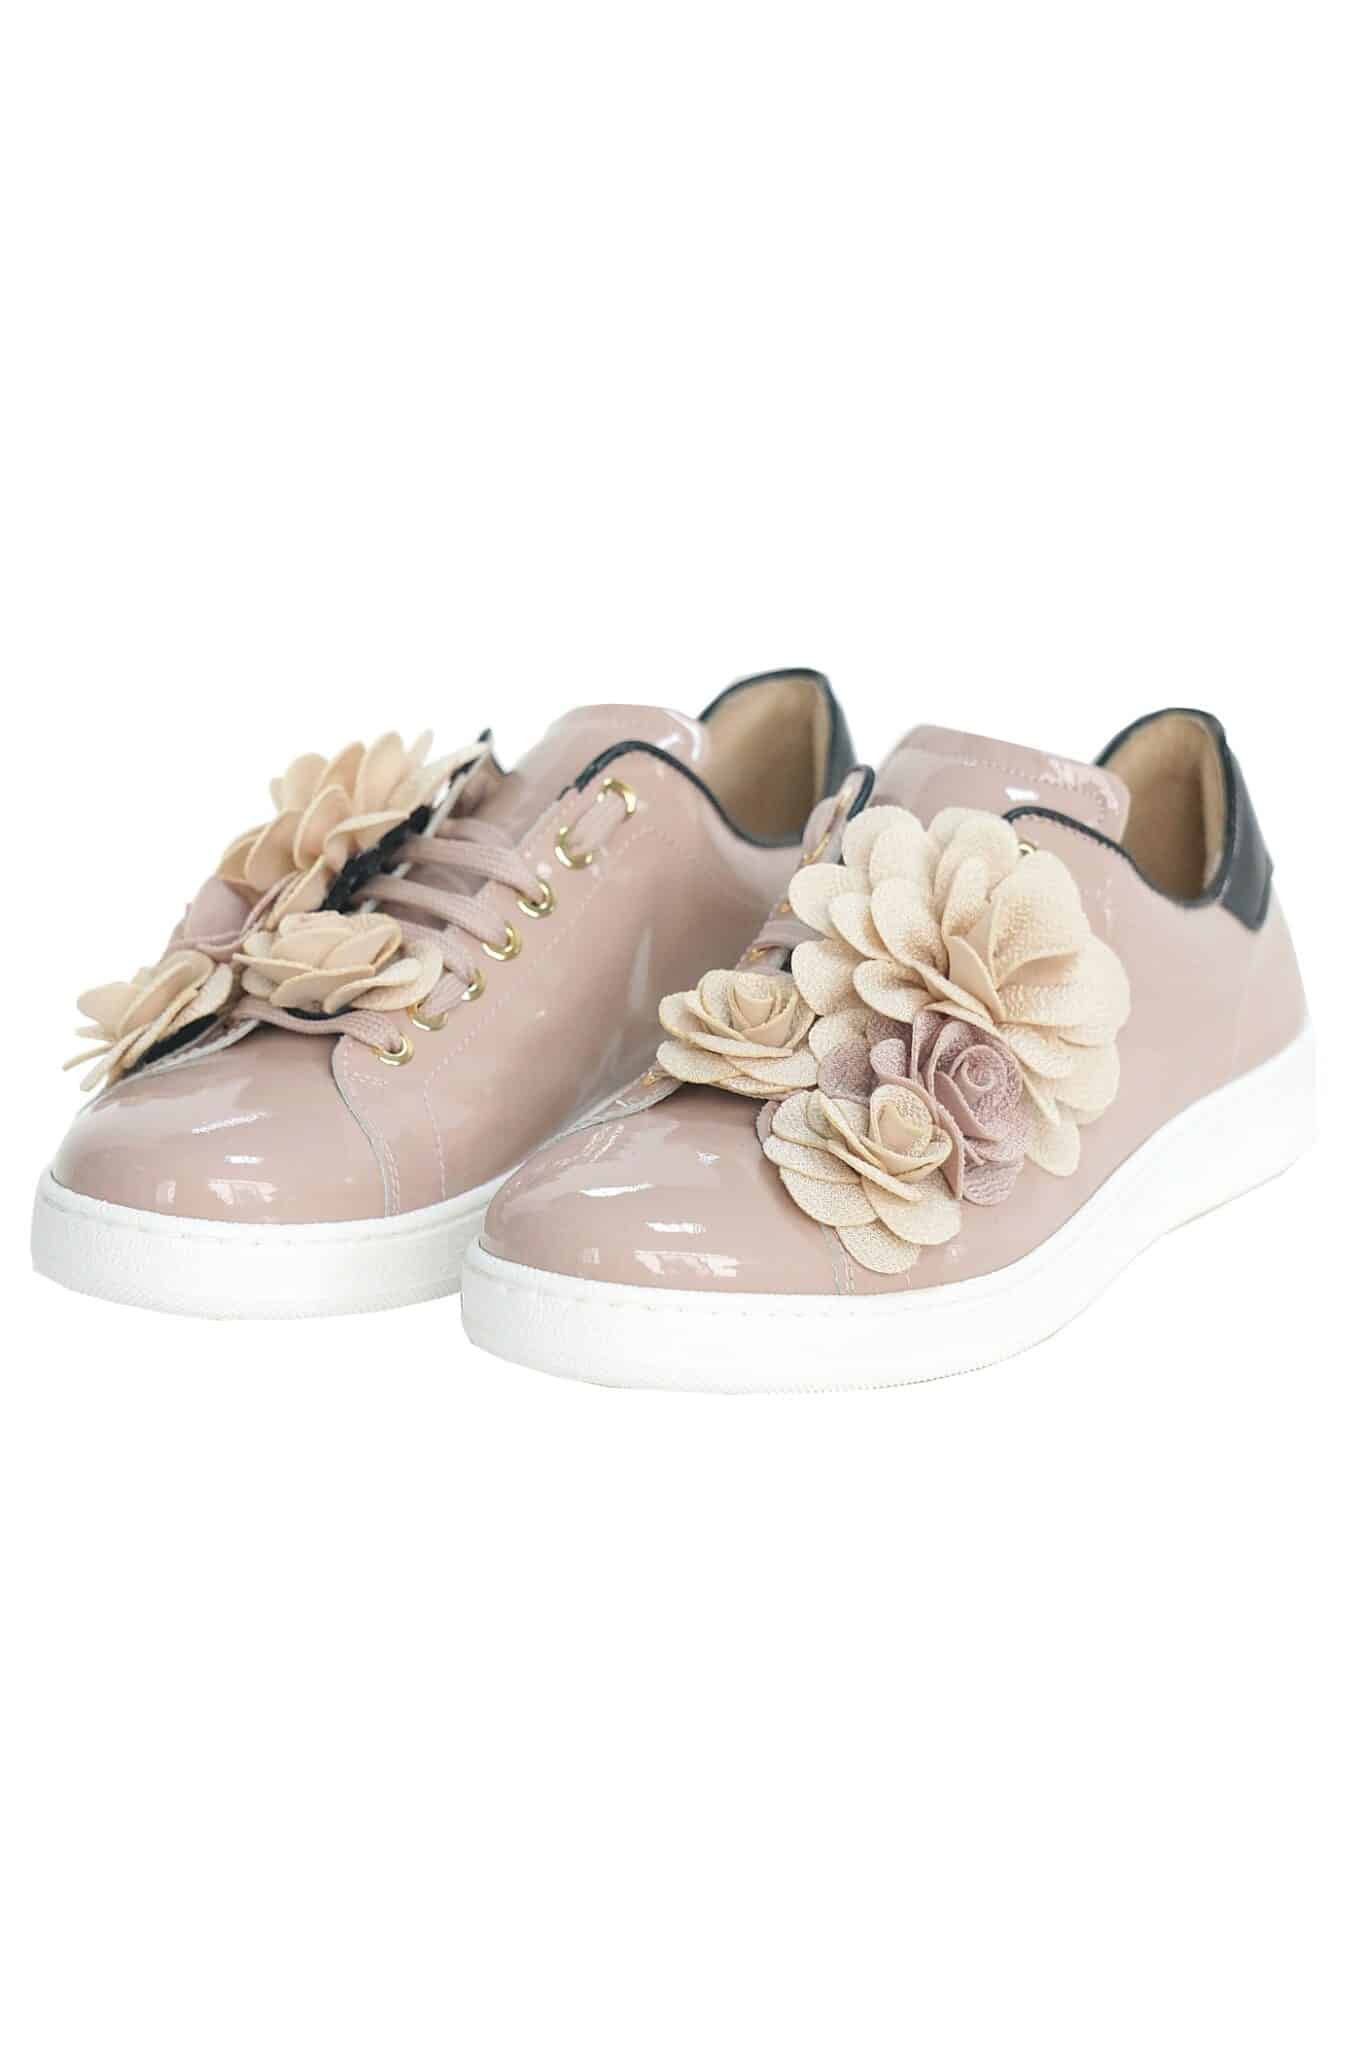 Dusty pink flower embellished elegant patent leather sneakers - Pokemaoke